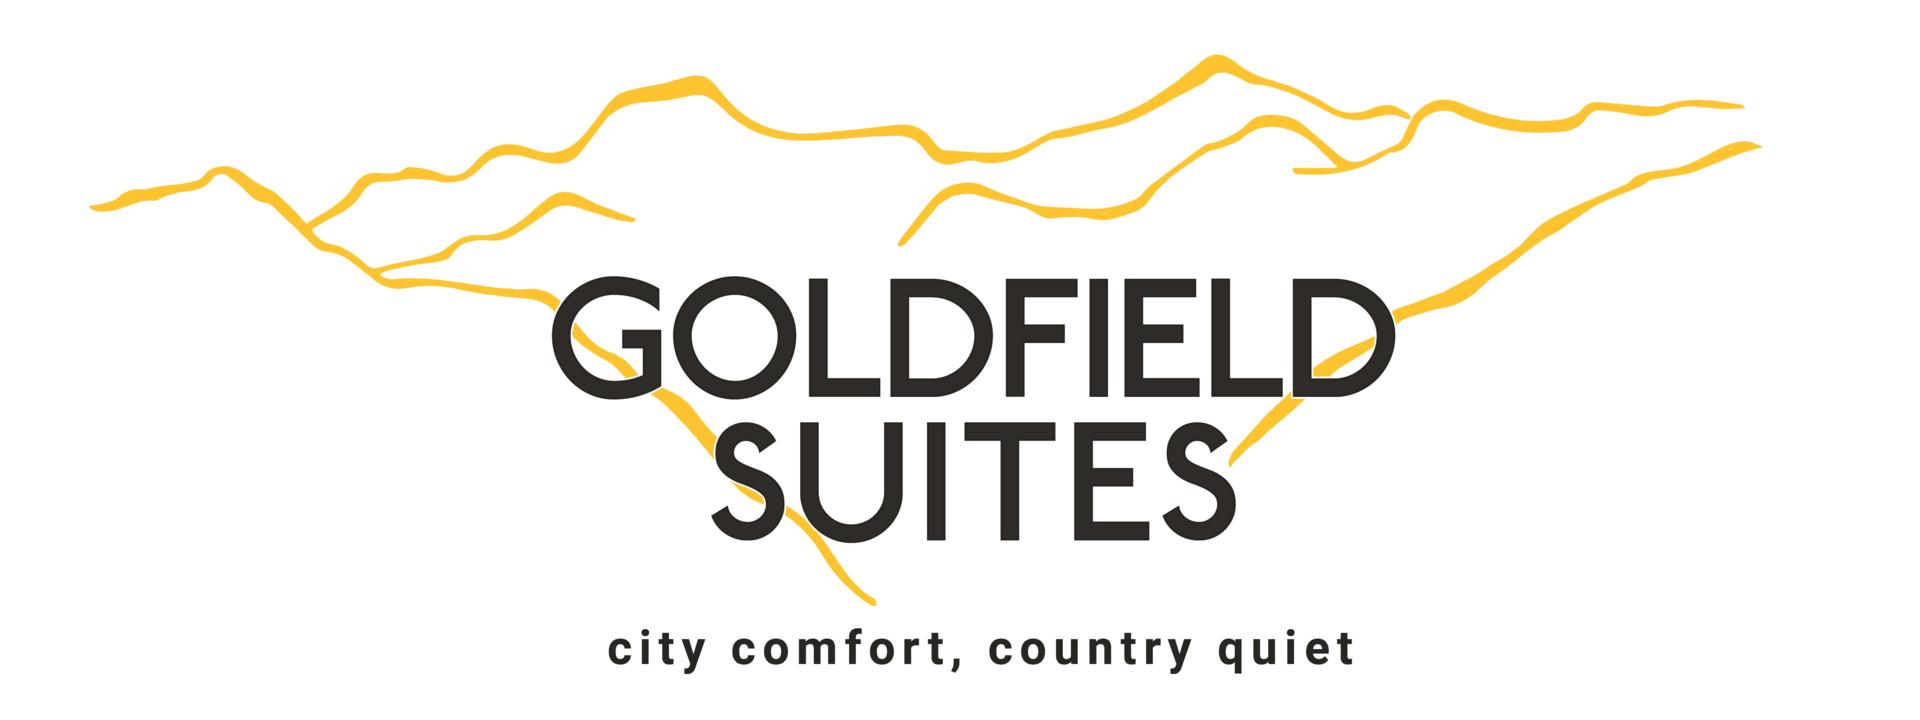 goldfield-suites-logo-tagline_two-tone.jpg